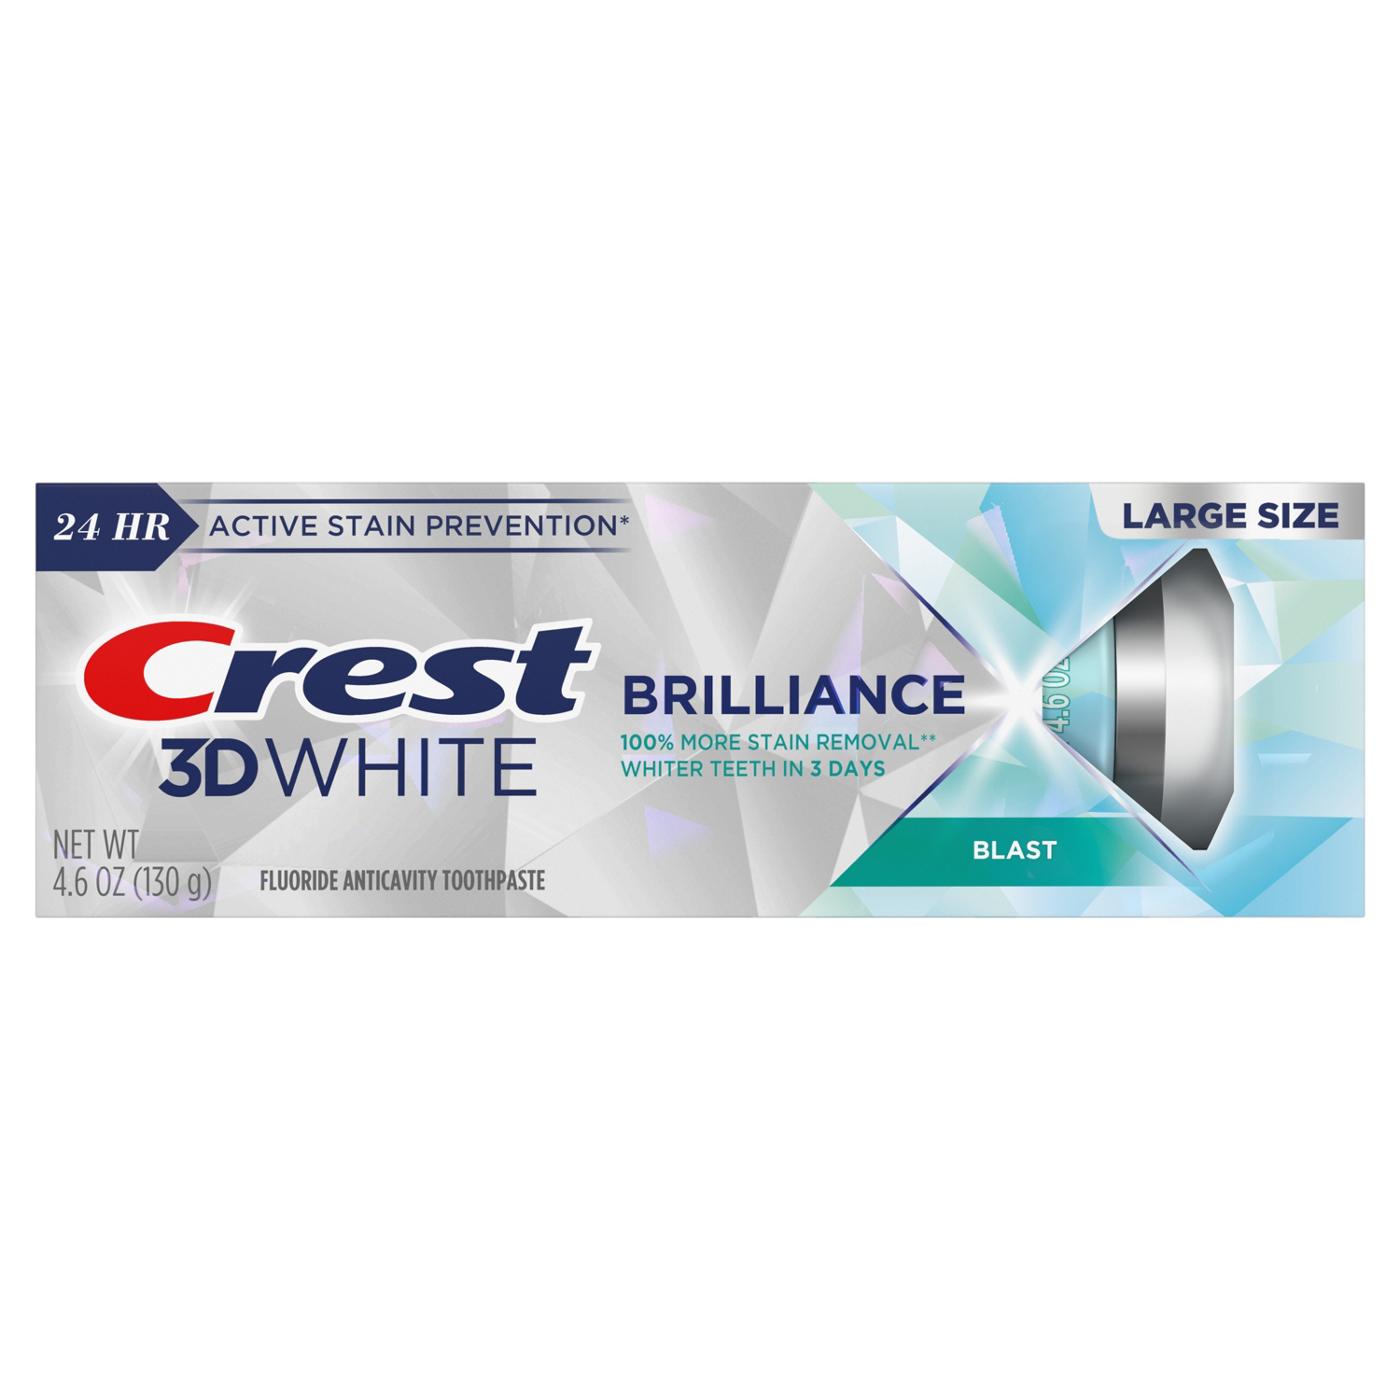 Crest 3D White Brilliance Toothpaste - Blast; image 1 of 6